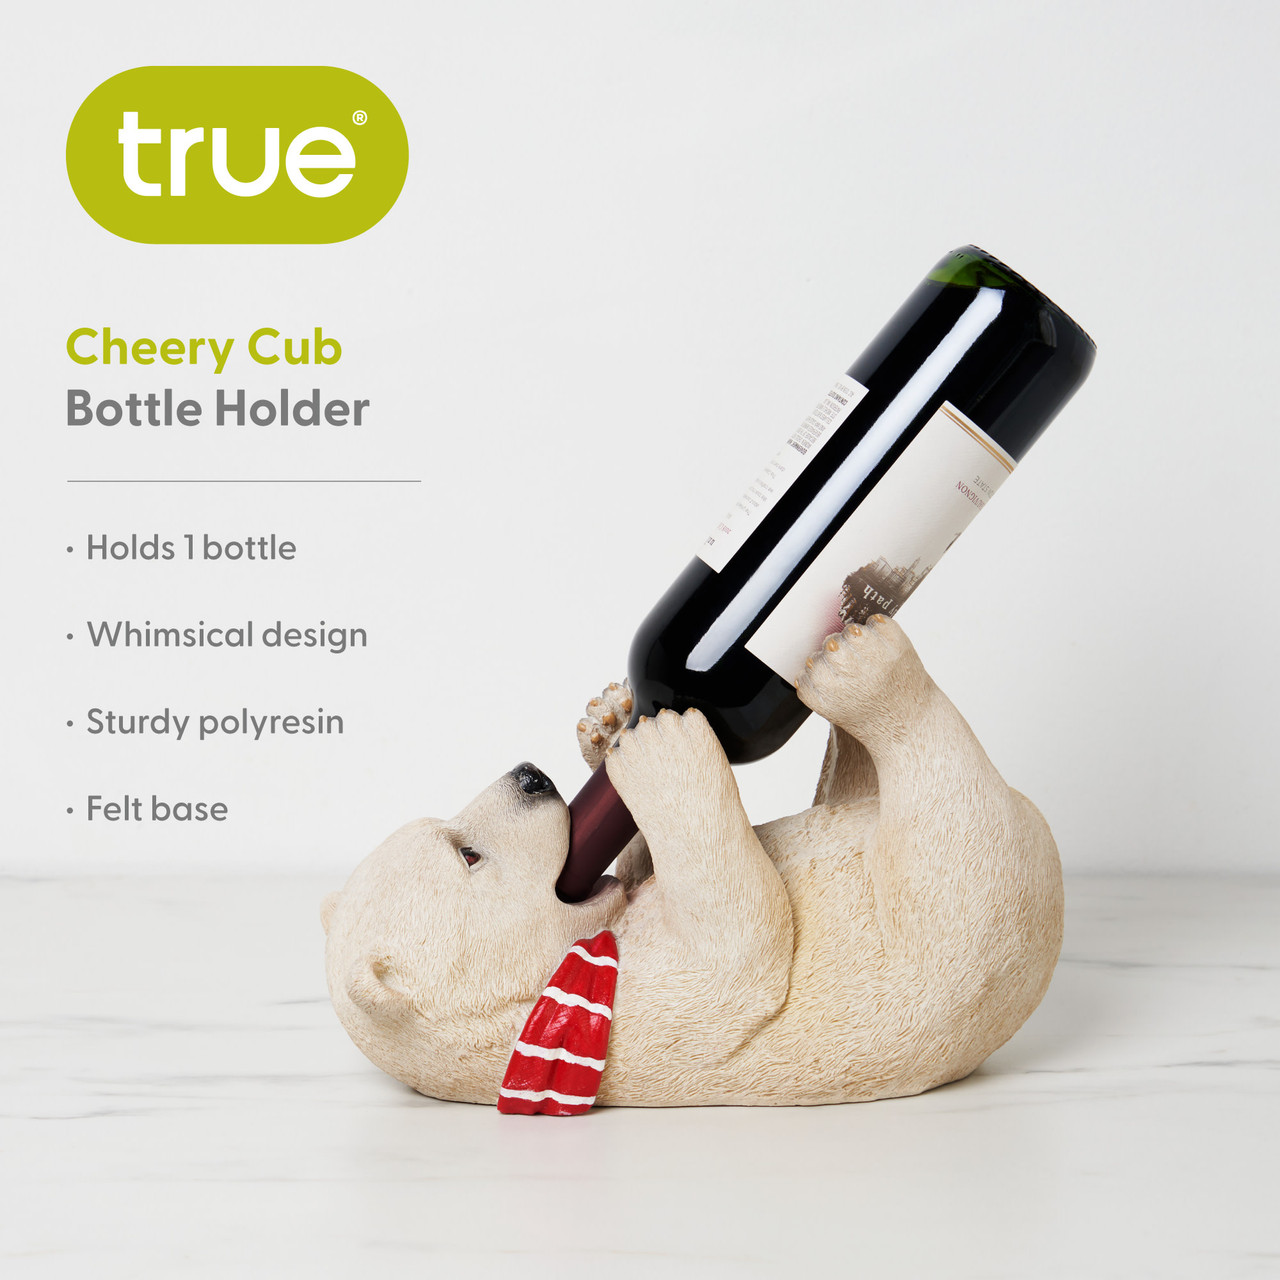 Cheery Cub Bottle Holder by True